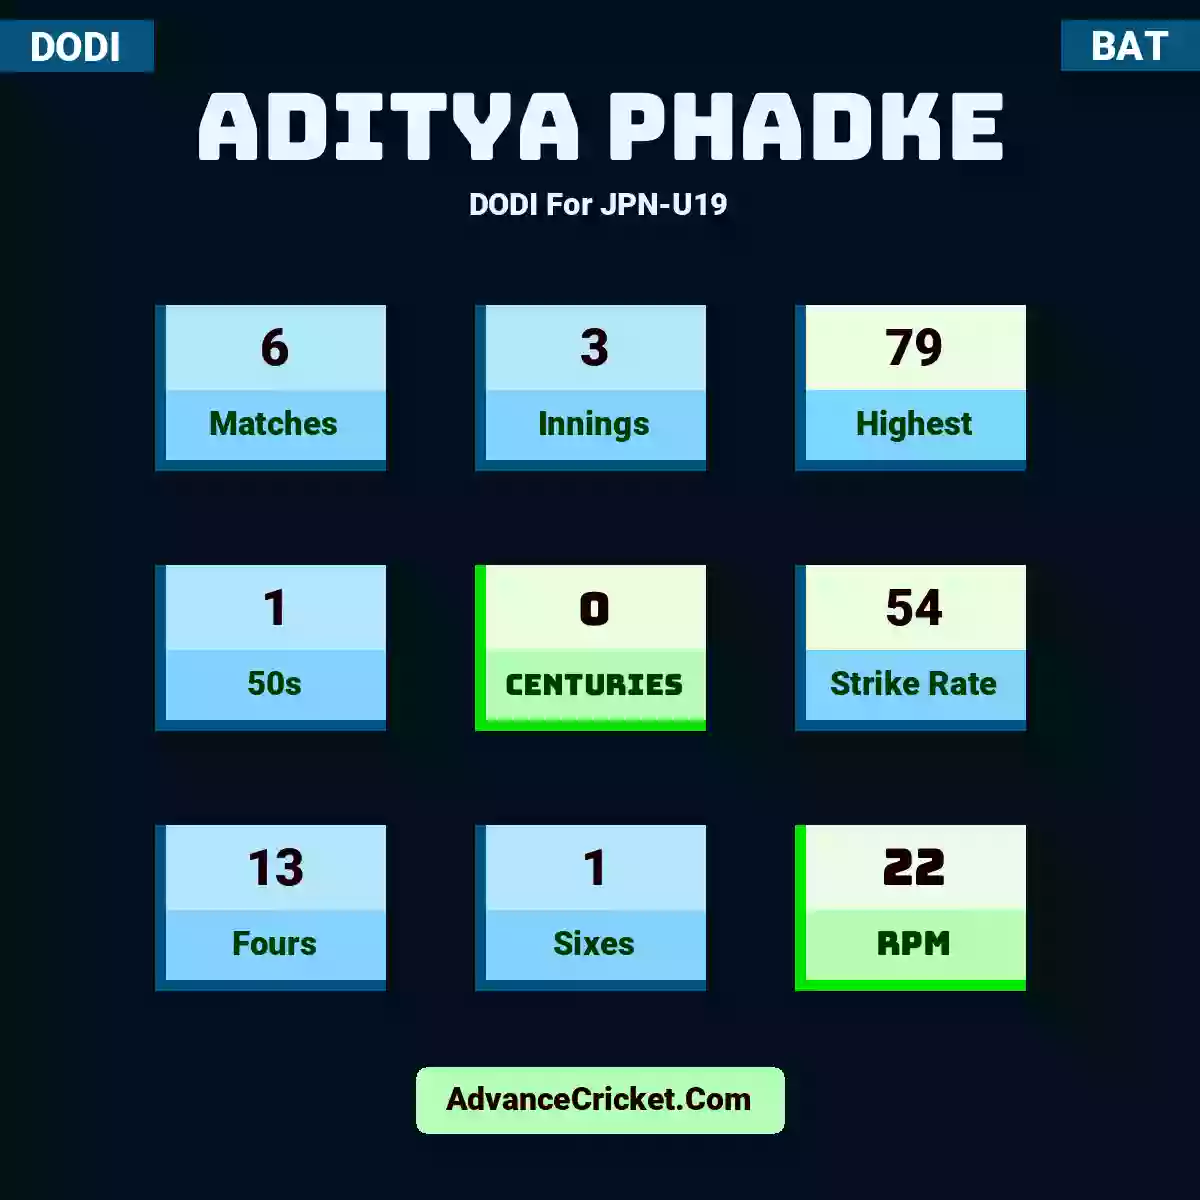 Aditya Phadke DODI  For JPN-U19, Aditya Phadke played 6 matches, scored 79 runs as highest, 1 half-centuries, and 0 centuries, with a strike rate of 54. A.Phadke hit 13 fours and 1 sixes, with an RPM of 22.